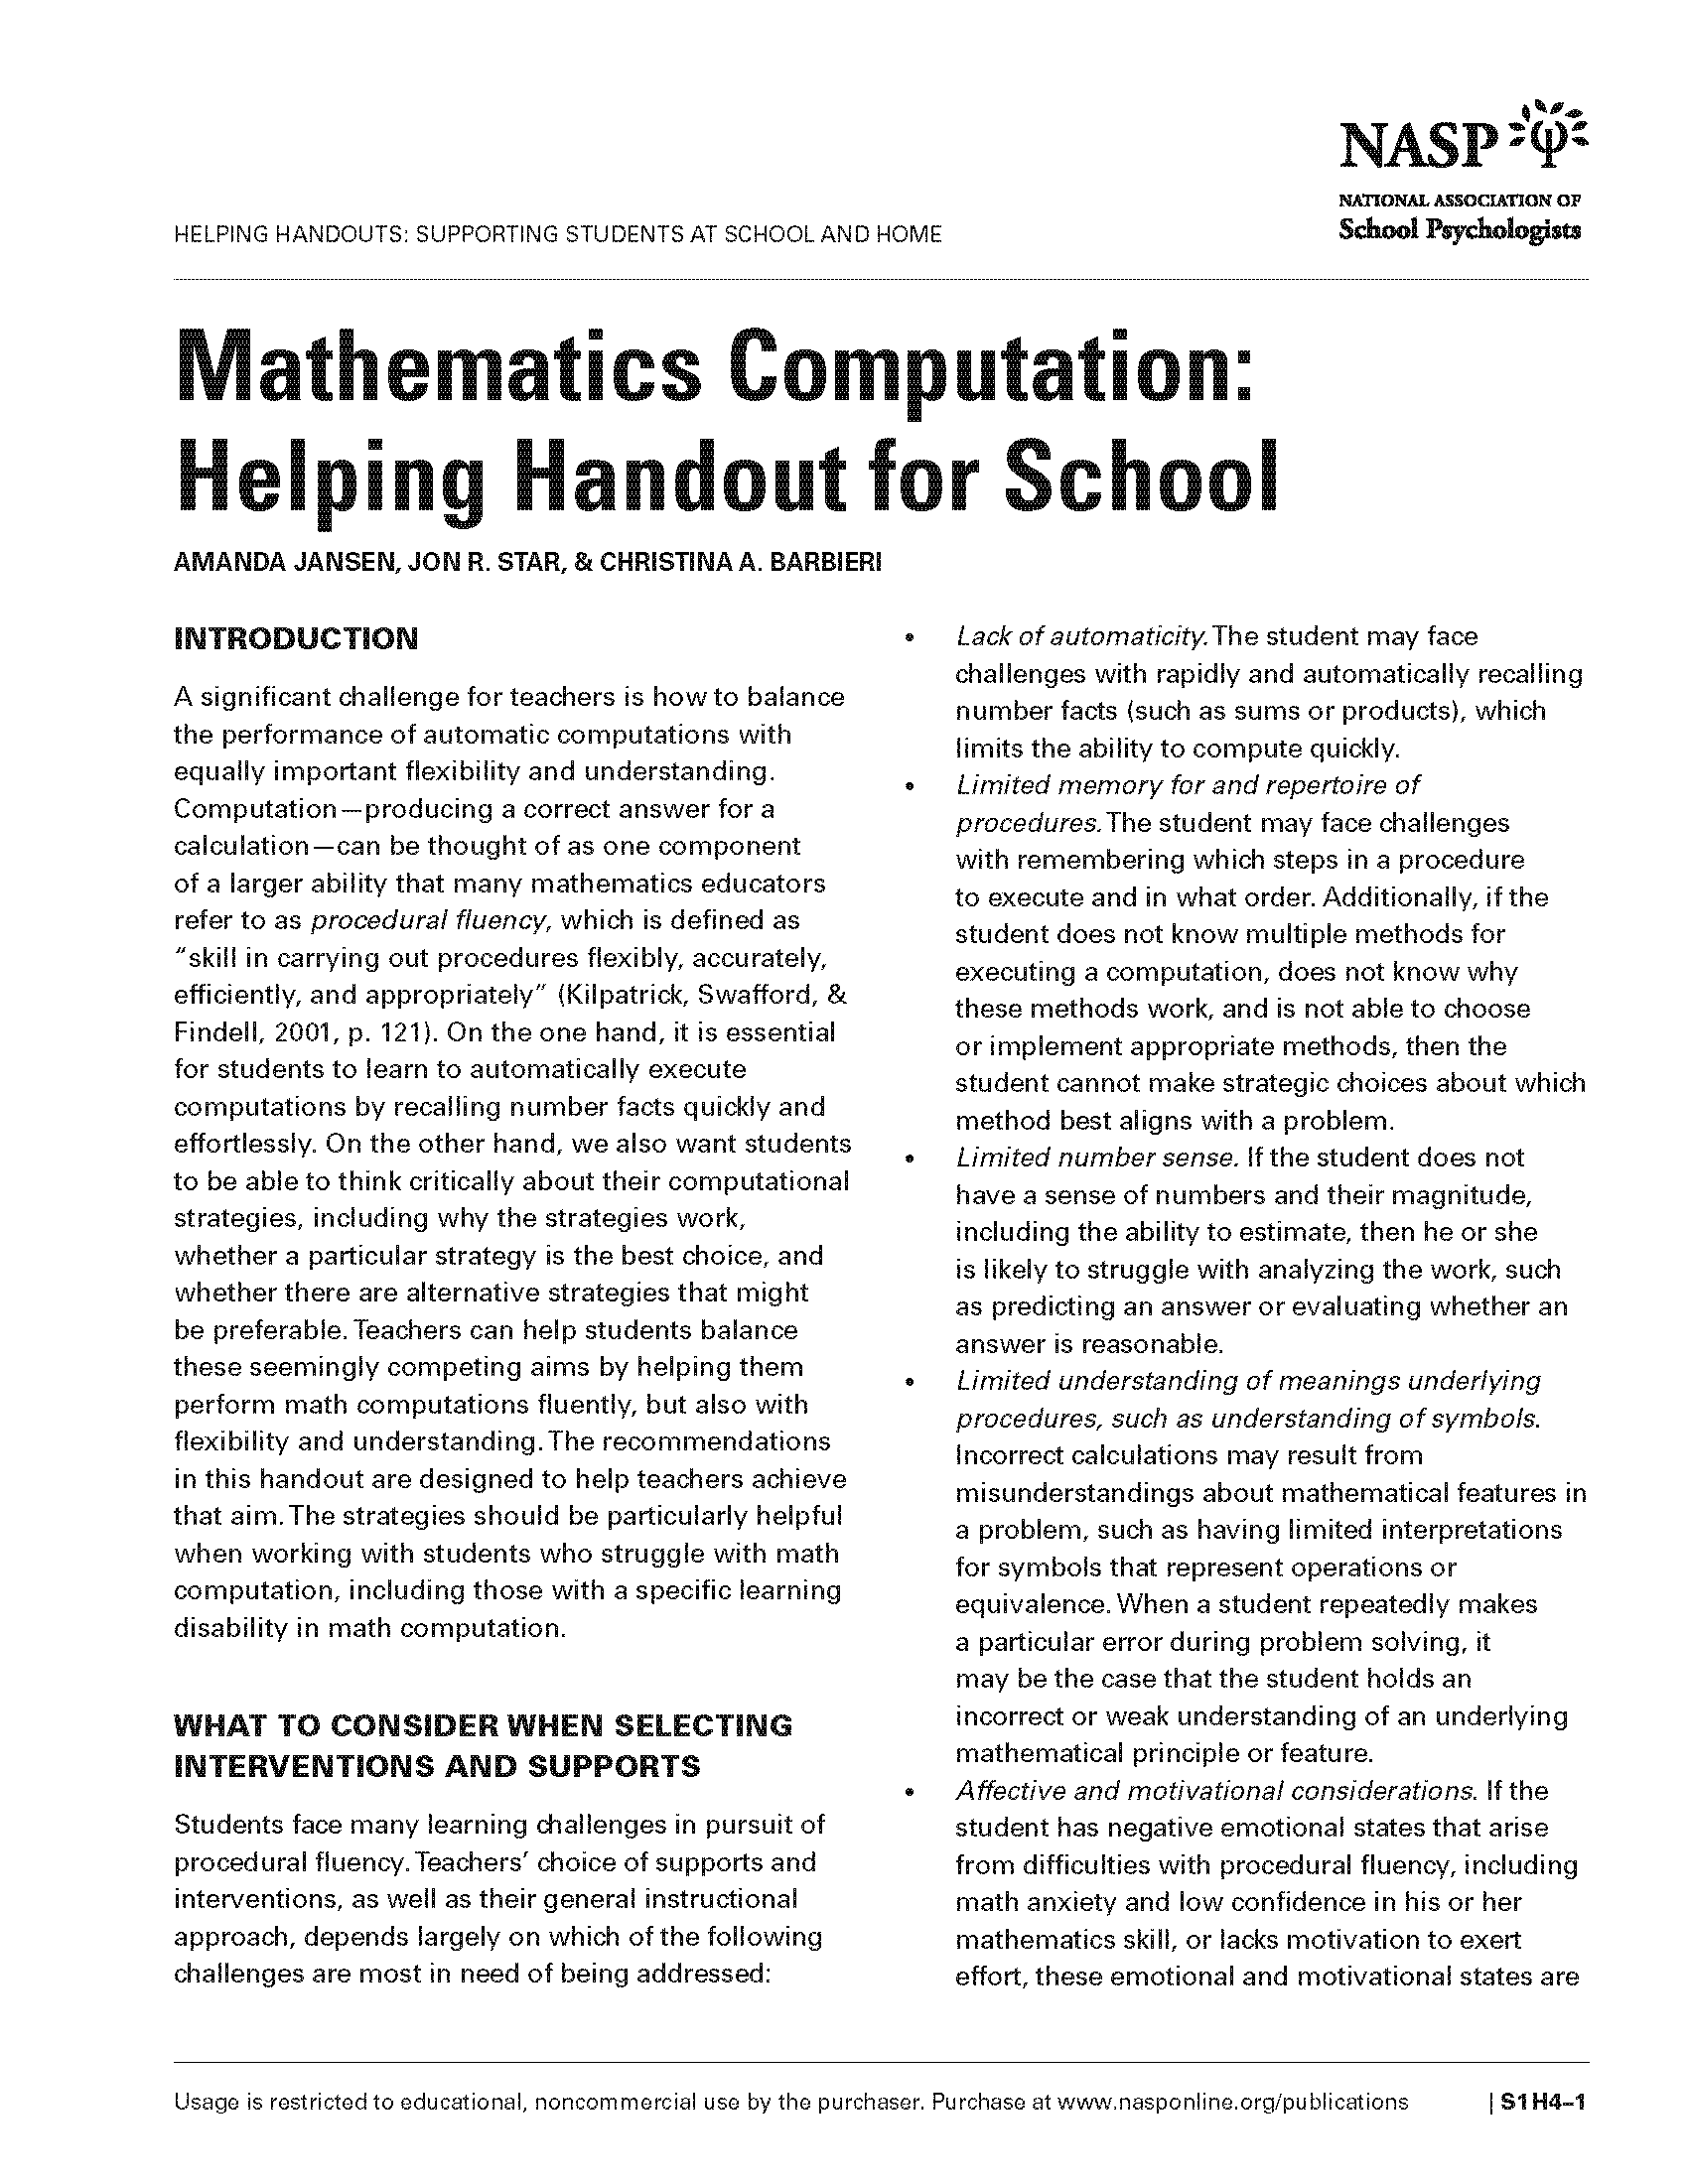 Mathematics Computation: Helping Handout for School